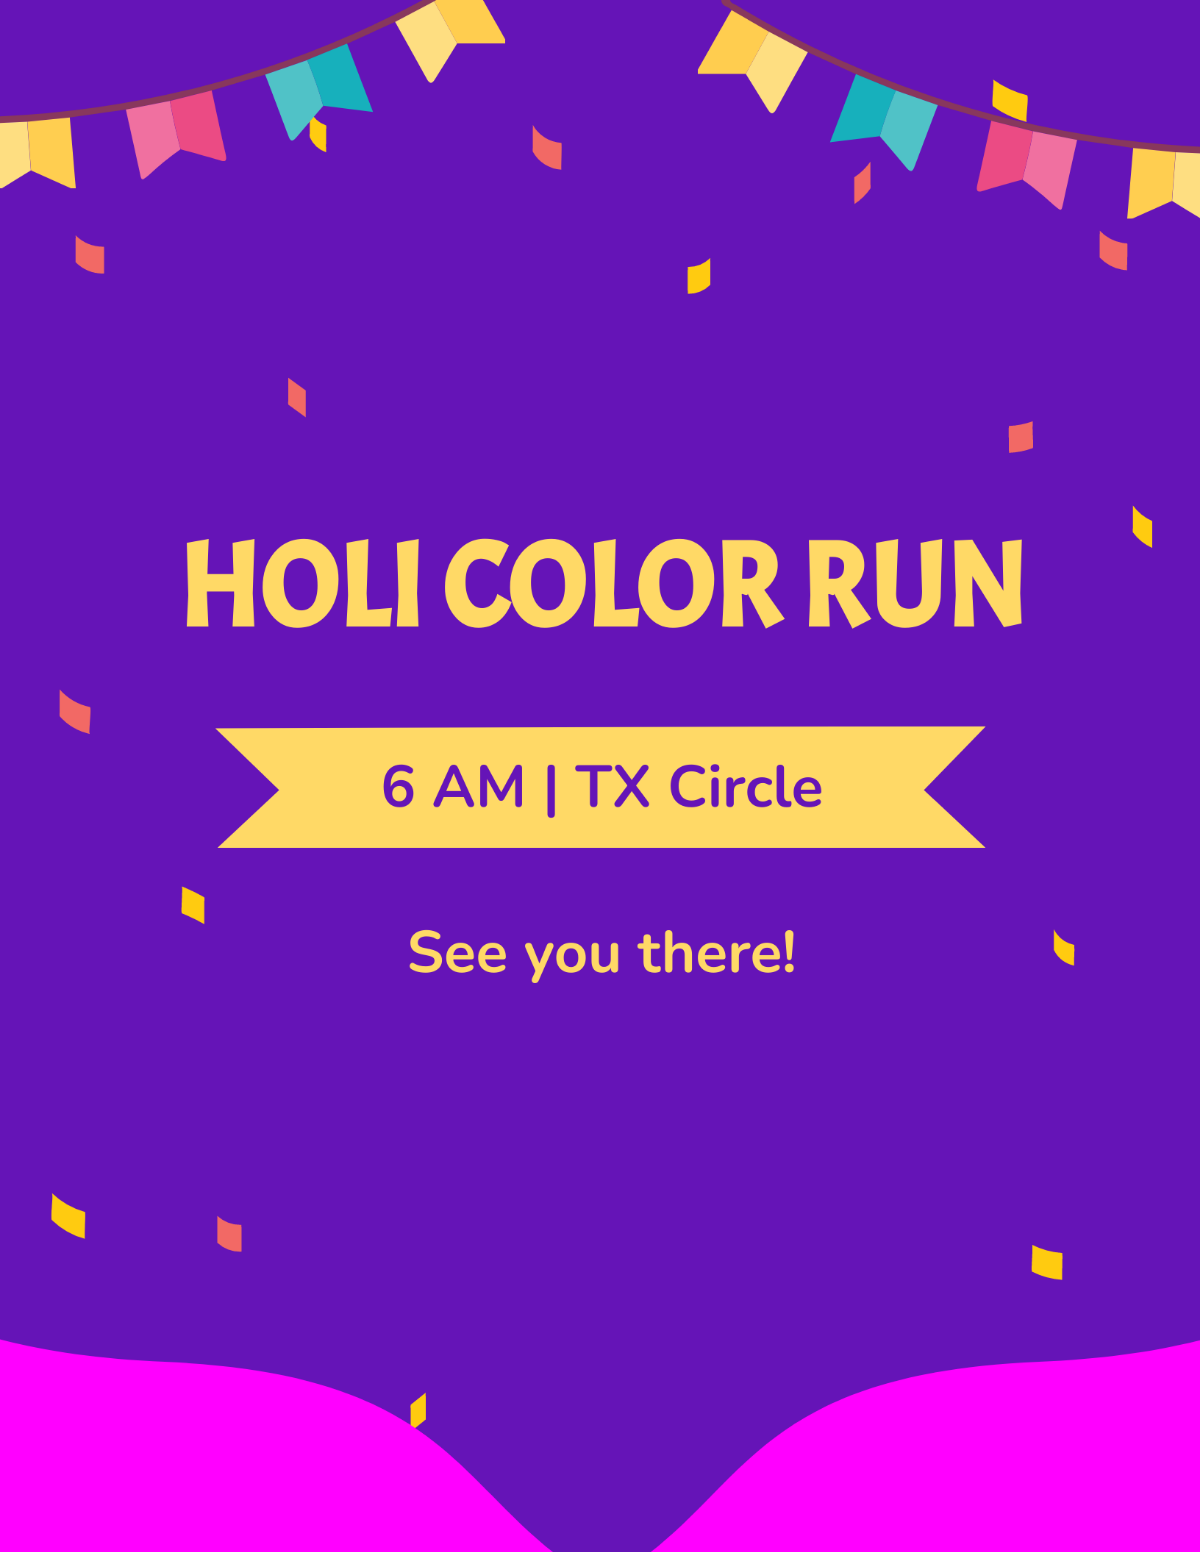 Holi Festival Fun Run Flyer Template